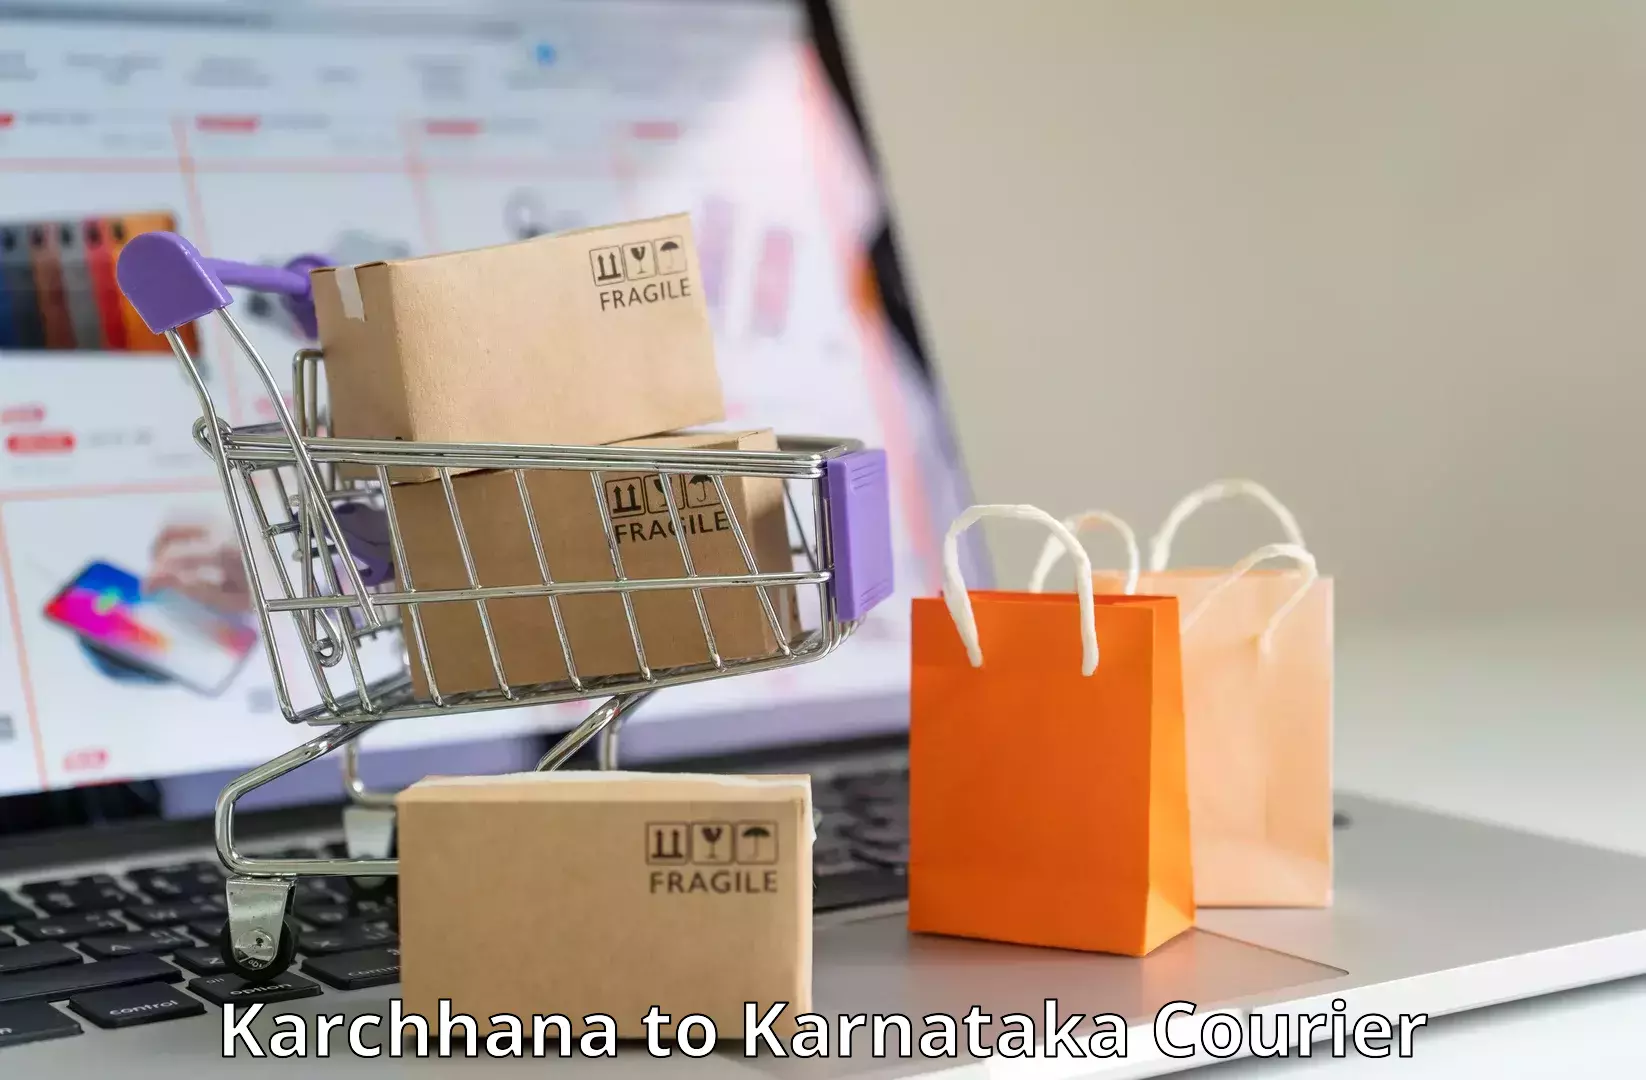 Package tracking Karchhana to Tumkur